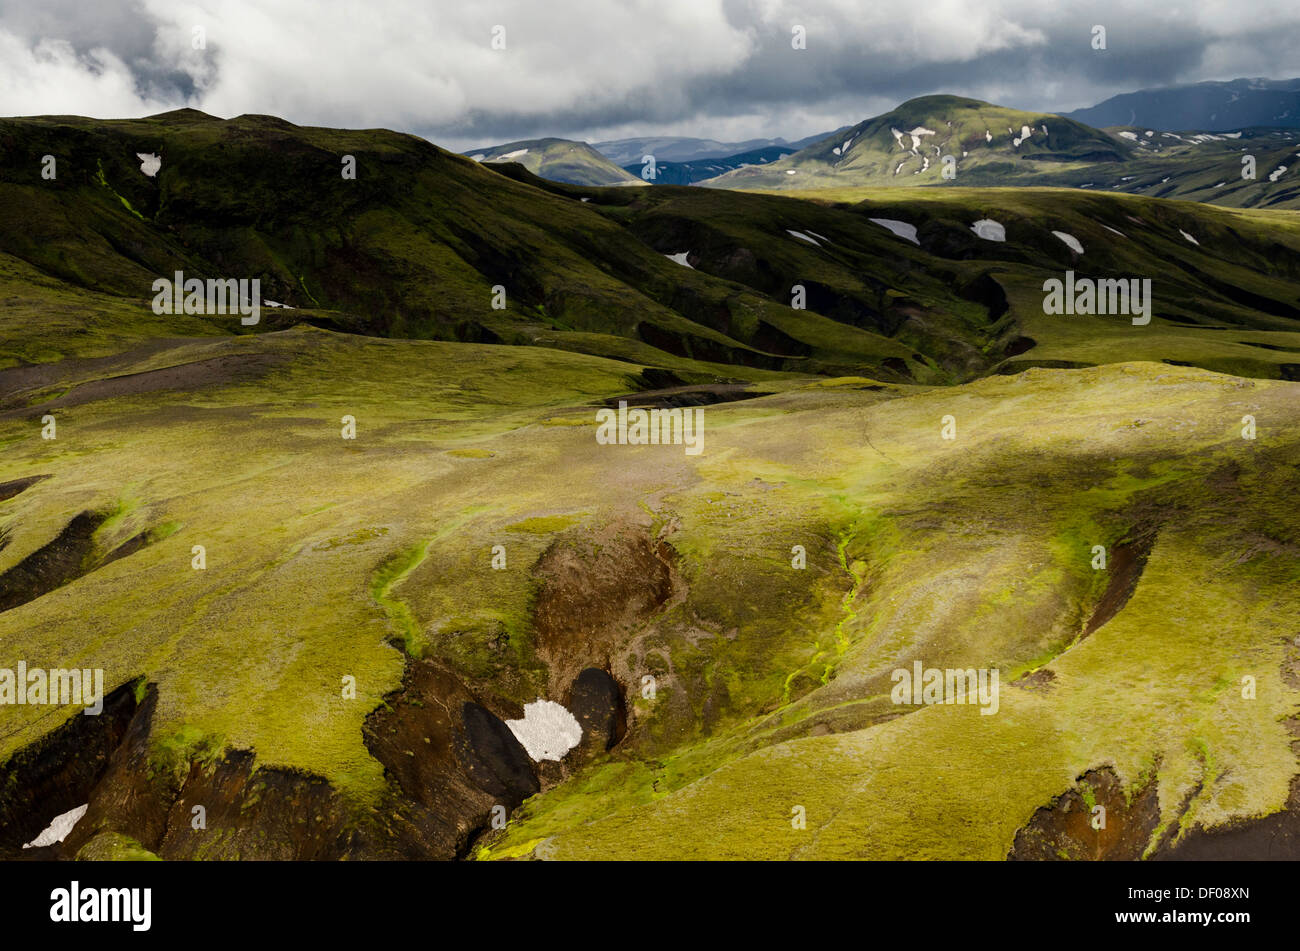 Vista aerea, moss paesaggio ricoperto, islandese Highlands, Islanda, Europa Foto Stock